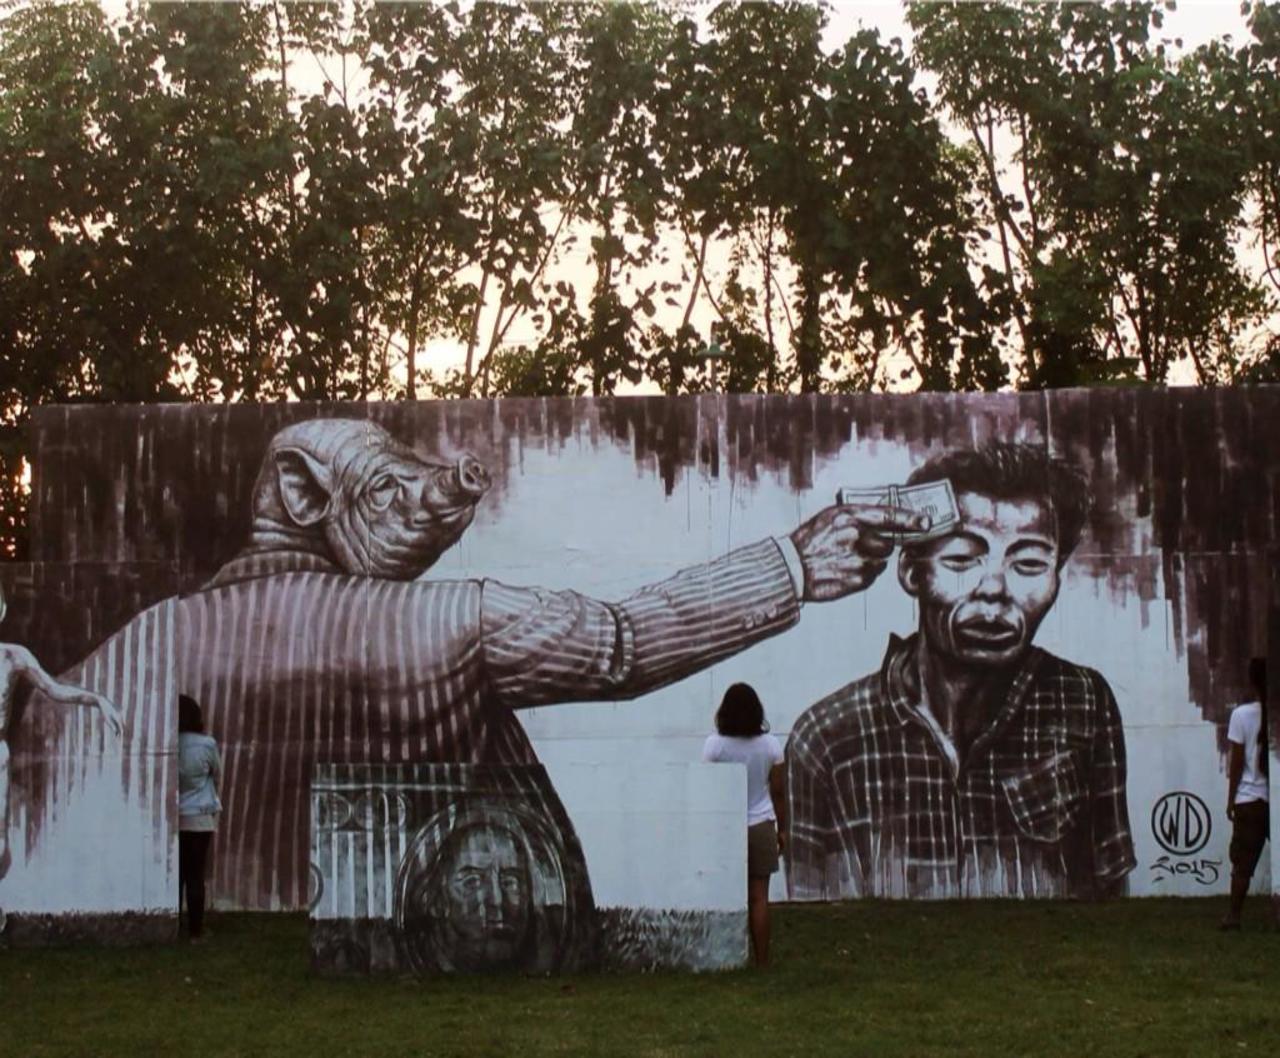 'Money Kills'
Street Art by the artist WD

#art #arte #graffiti #streetart http://t.co/JPTcg9Yqpi